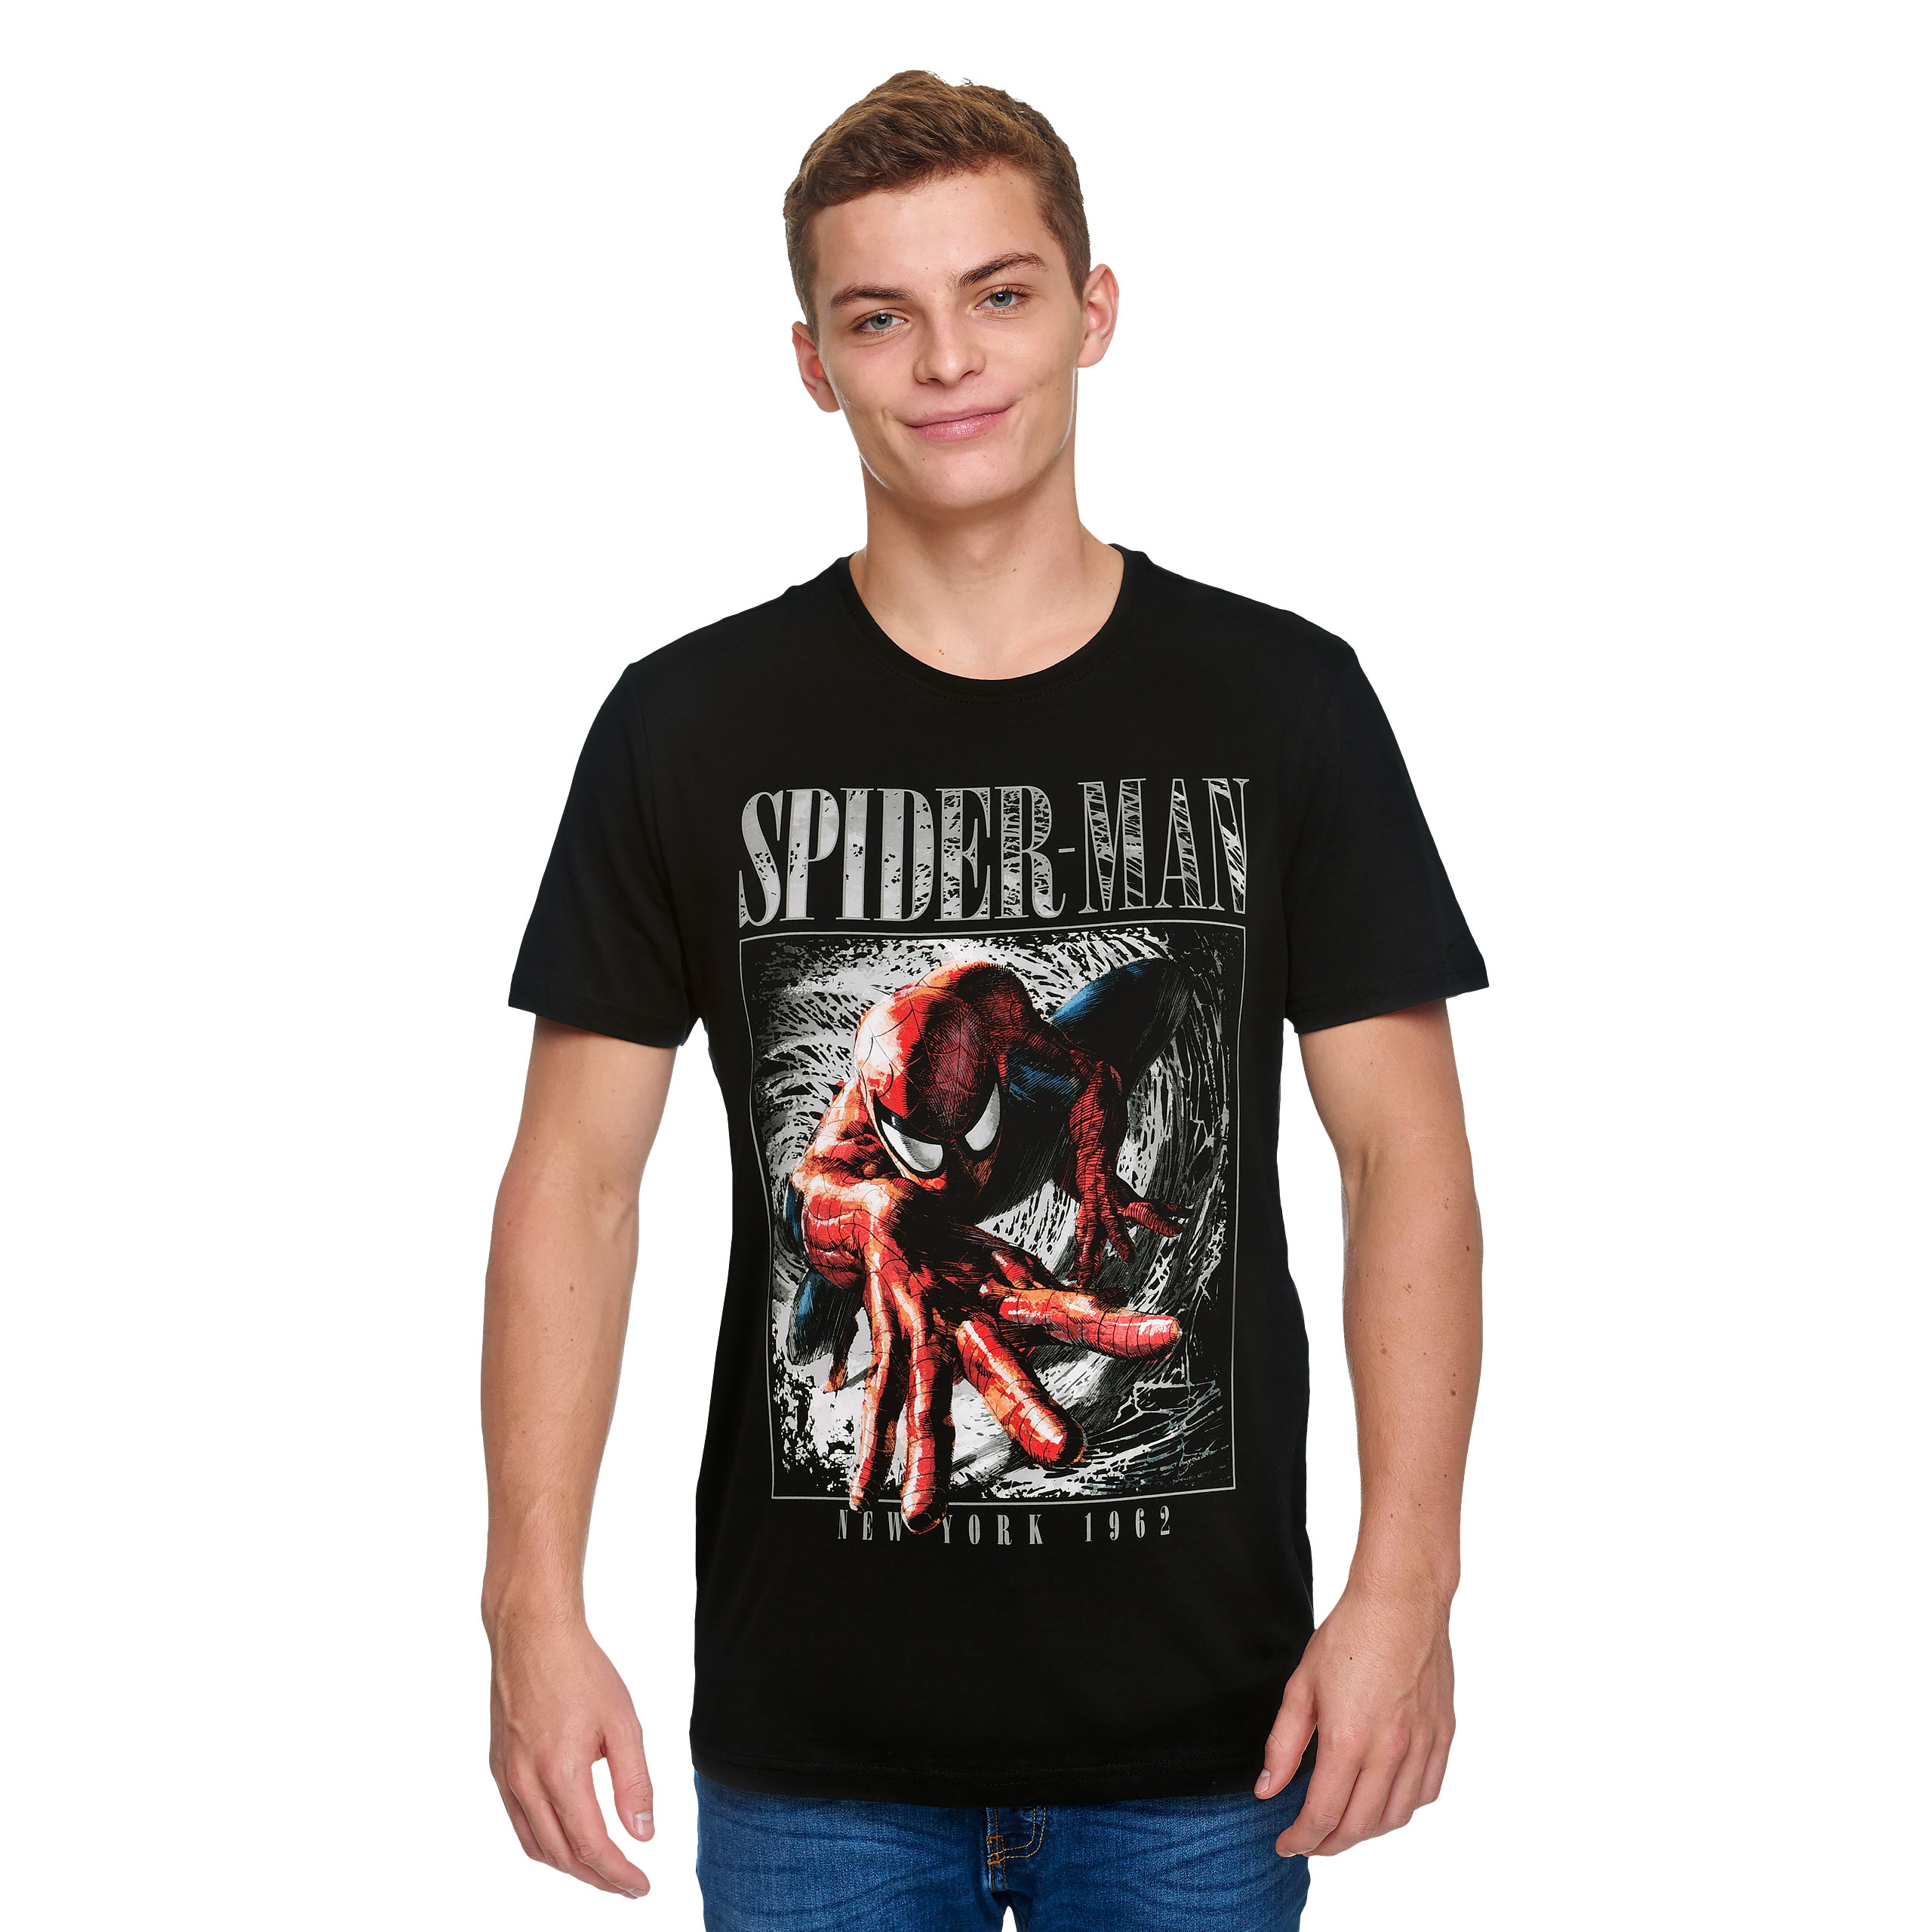 Spider-Man - New York 1962 T-Shirt noir